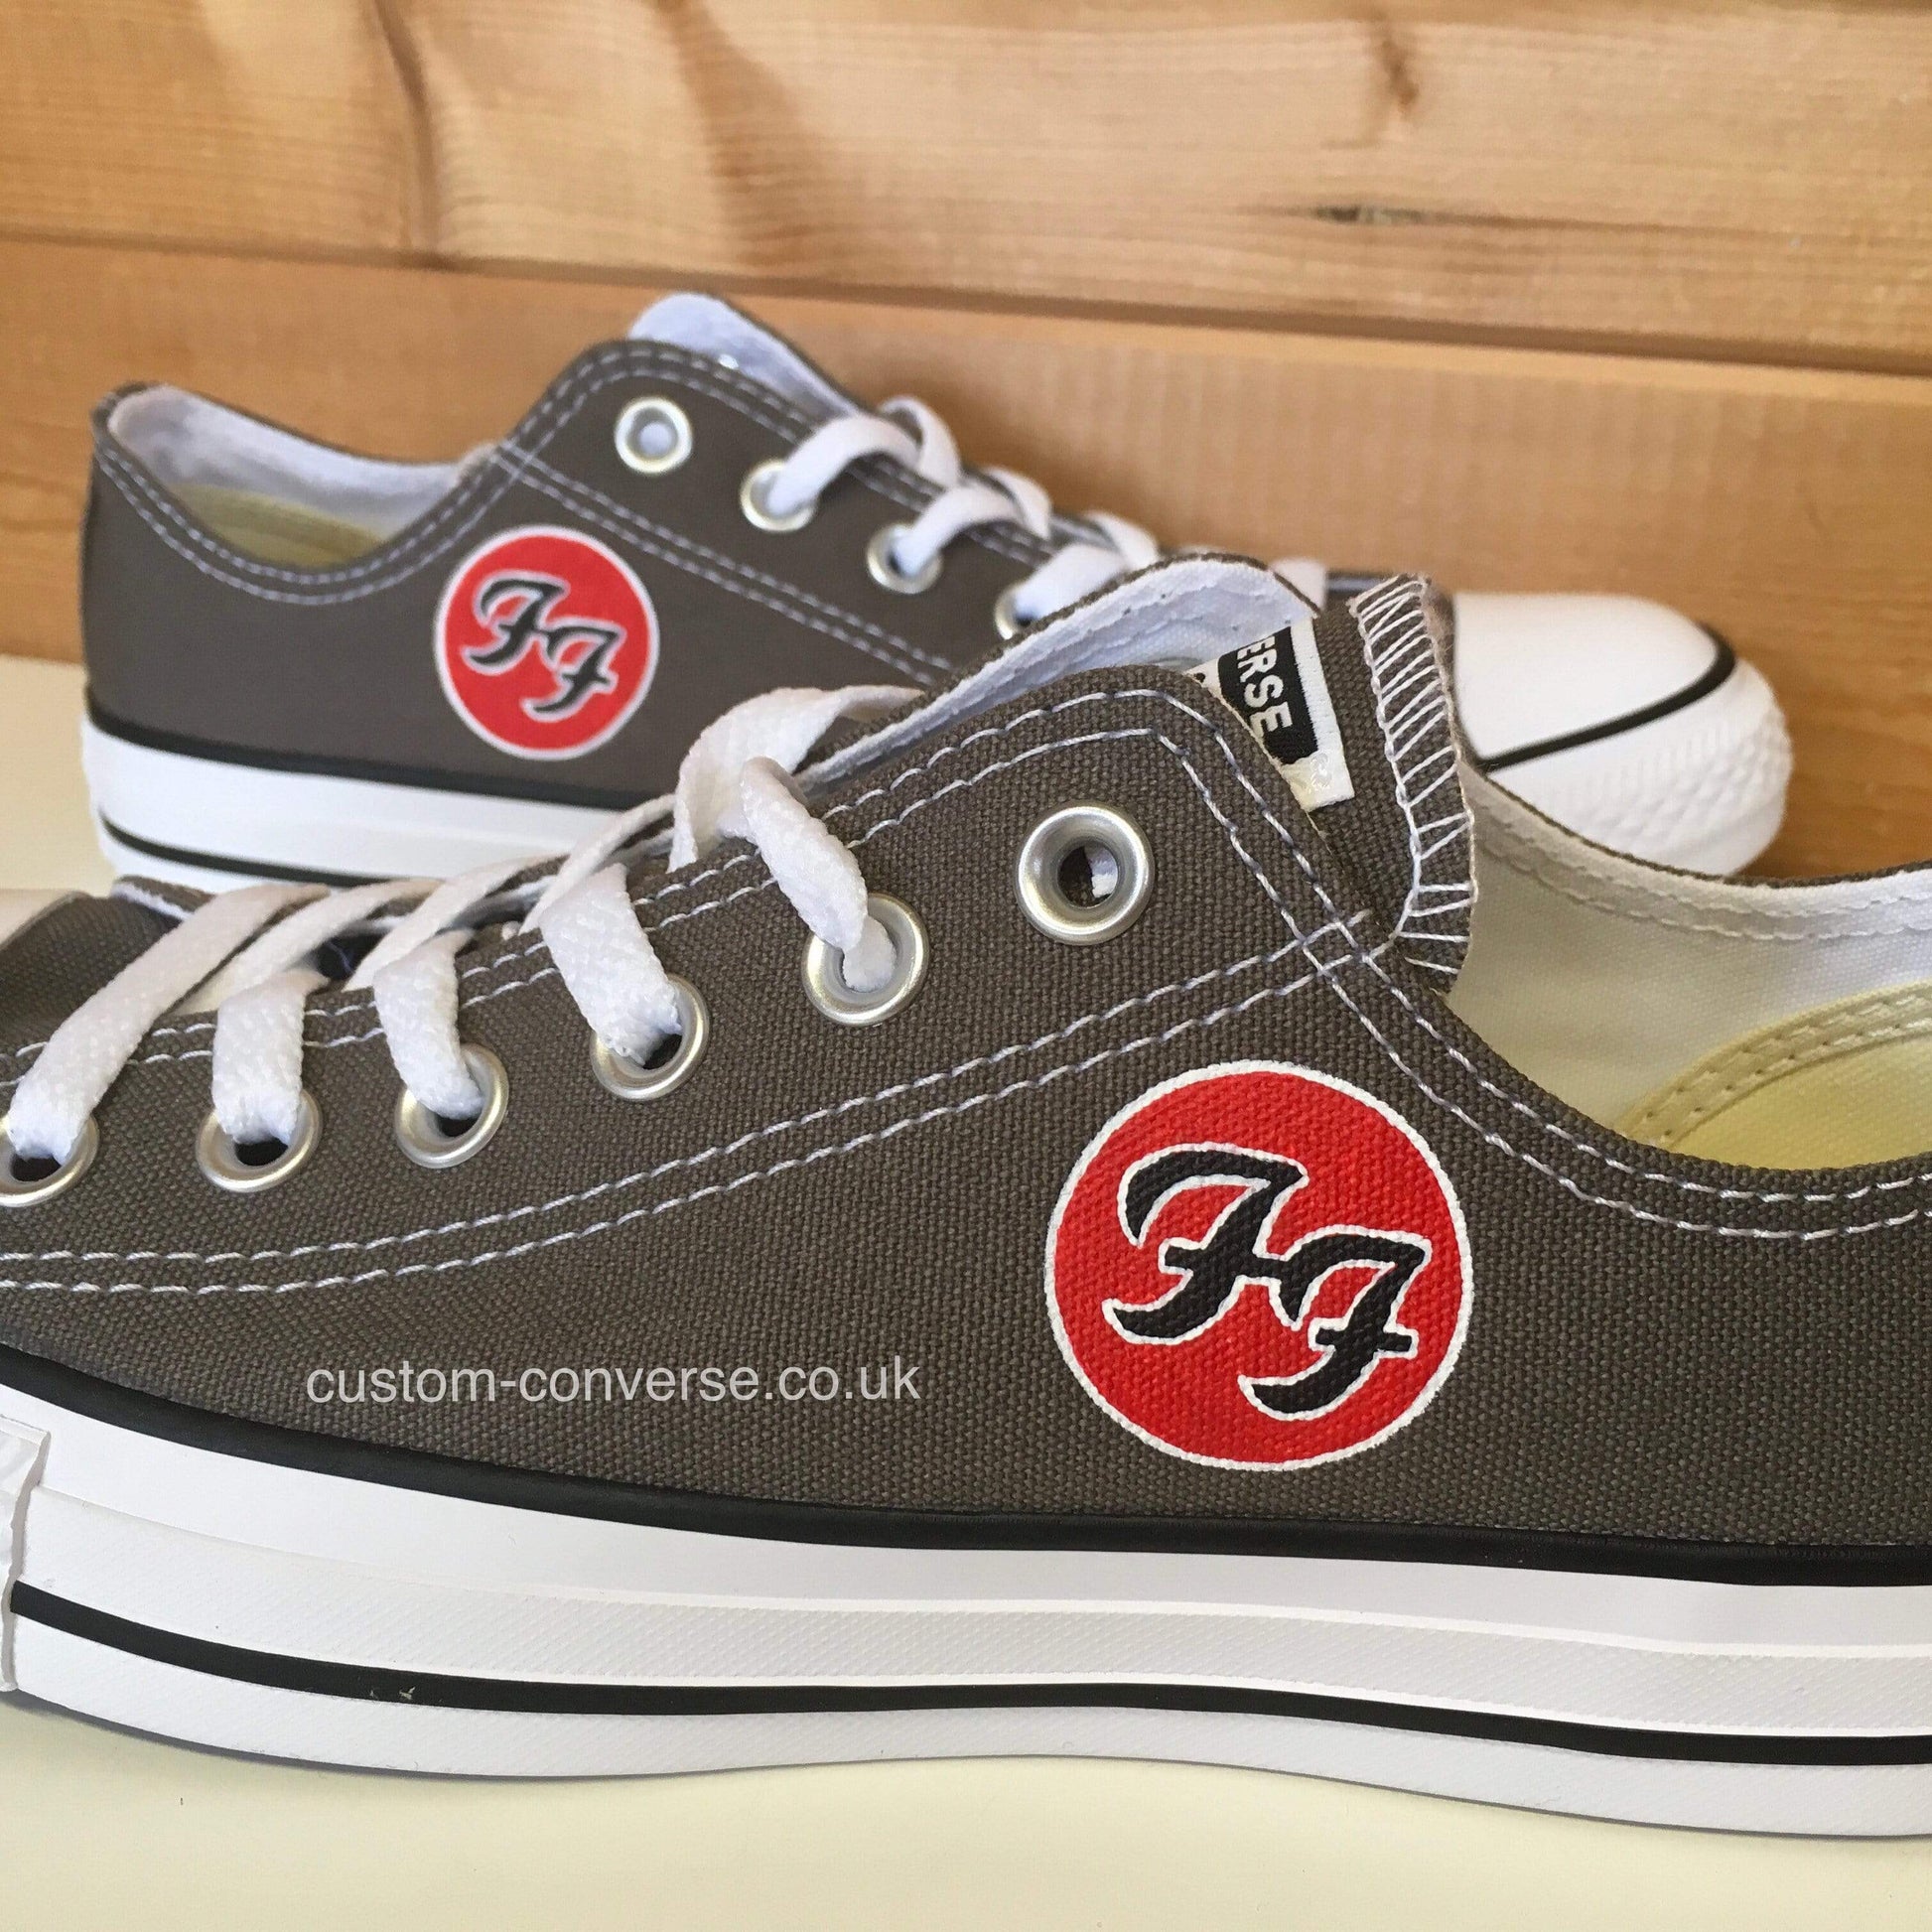 Foo Fighters - Custom Converse Ltd.